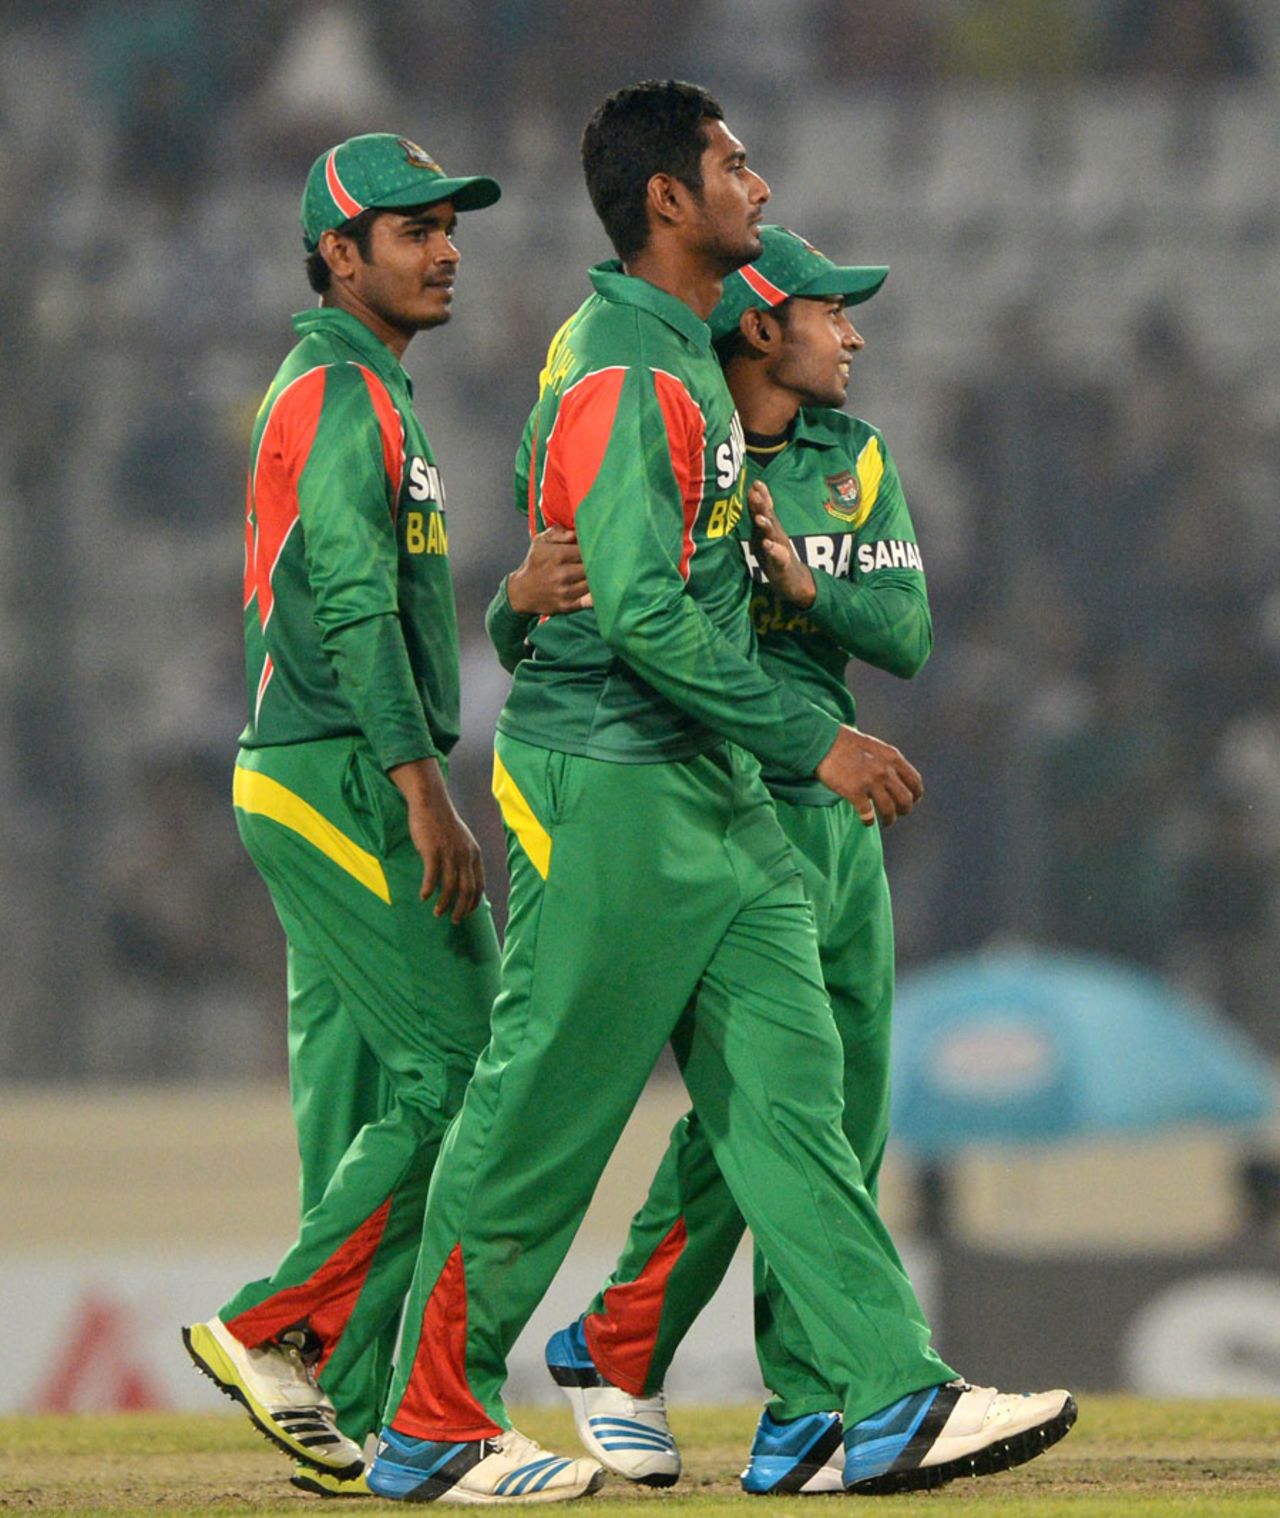 Mahmudullah is congratulated after a wicket, Bangladesh v Sri Lanka, 3rd ODI, Dhaka, February 22, 2014